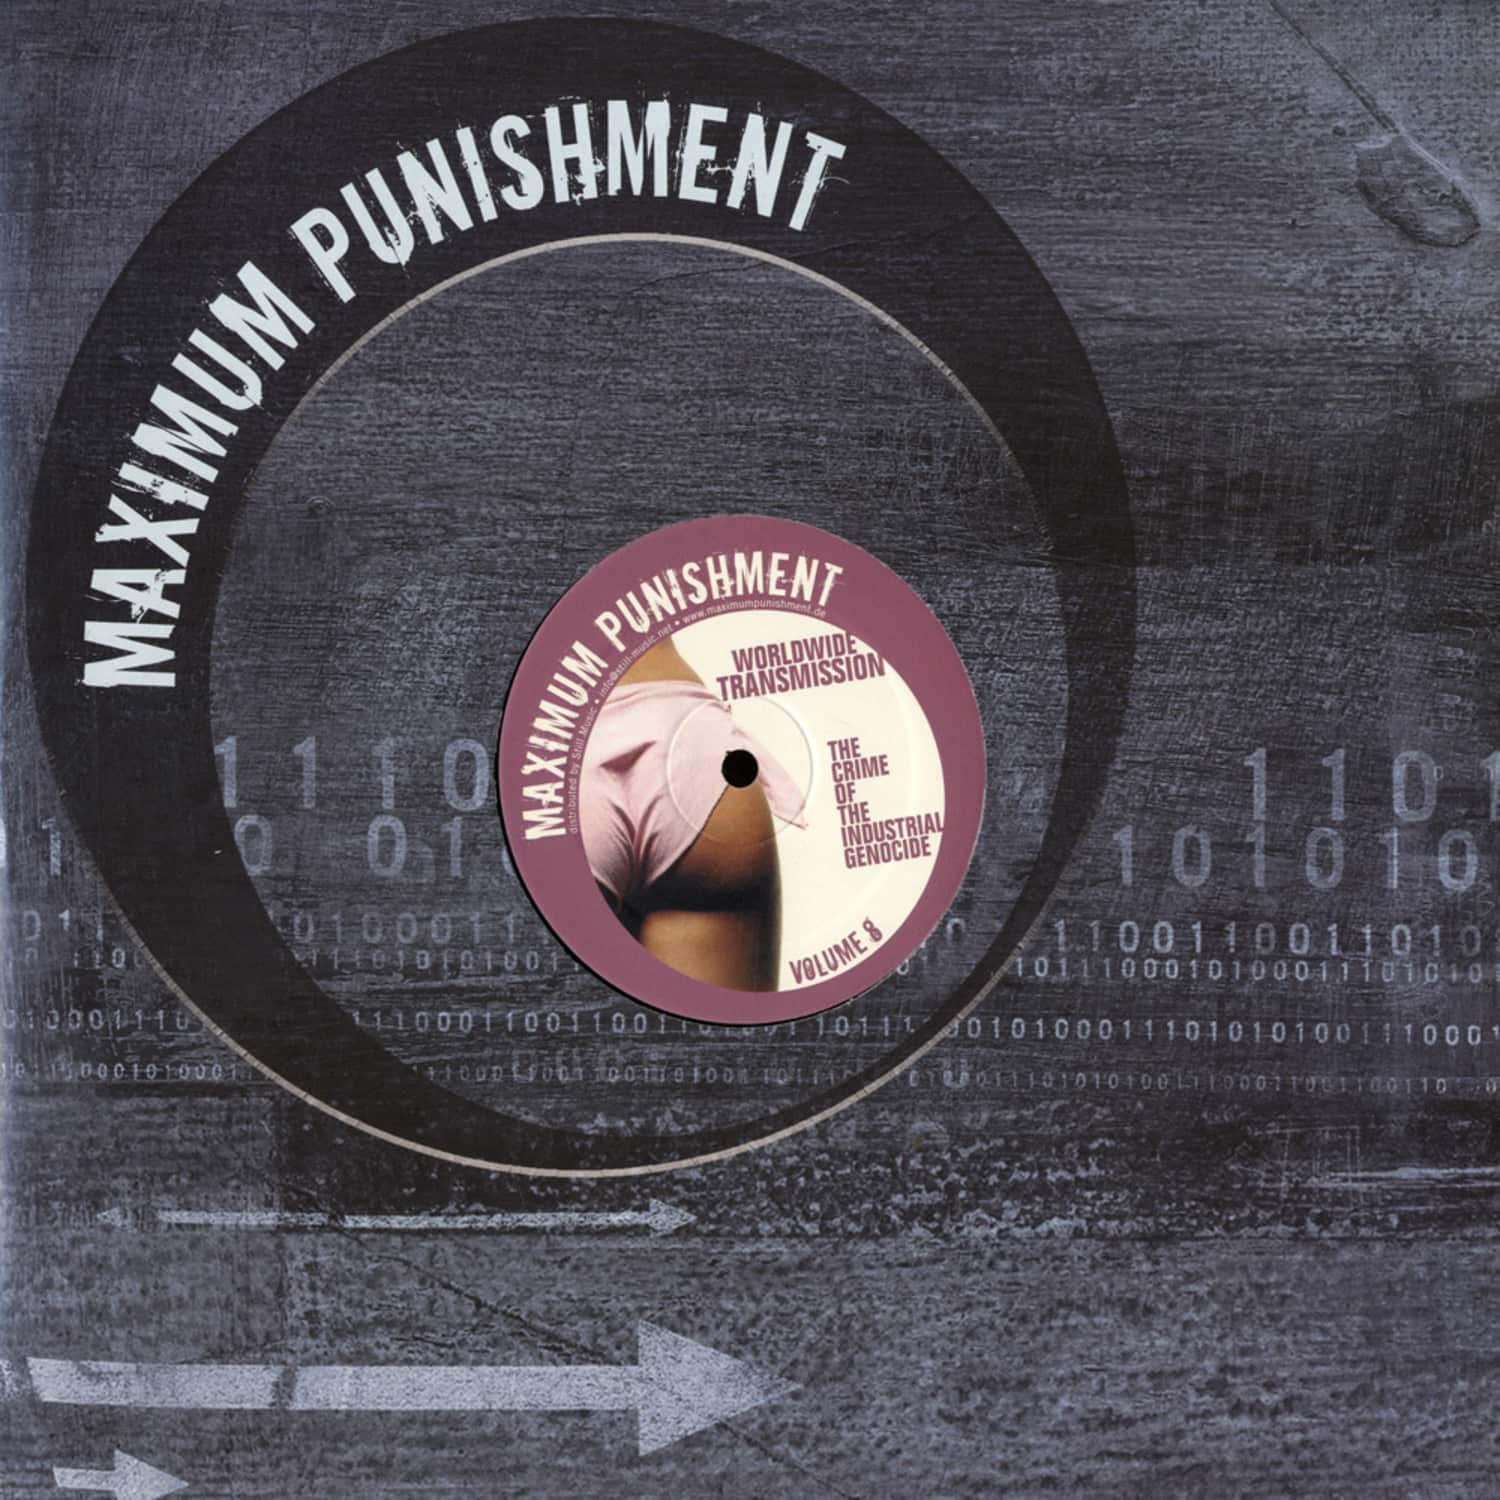 Maximum Punishment - VOL.8 - WORLDWIDE TRANSMISSION